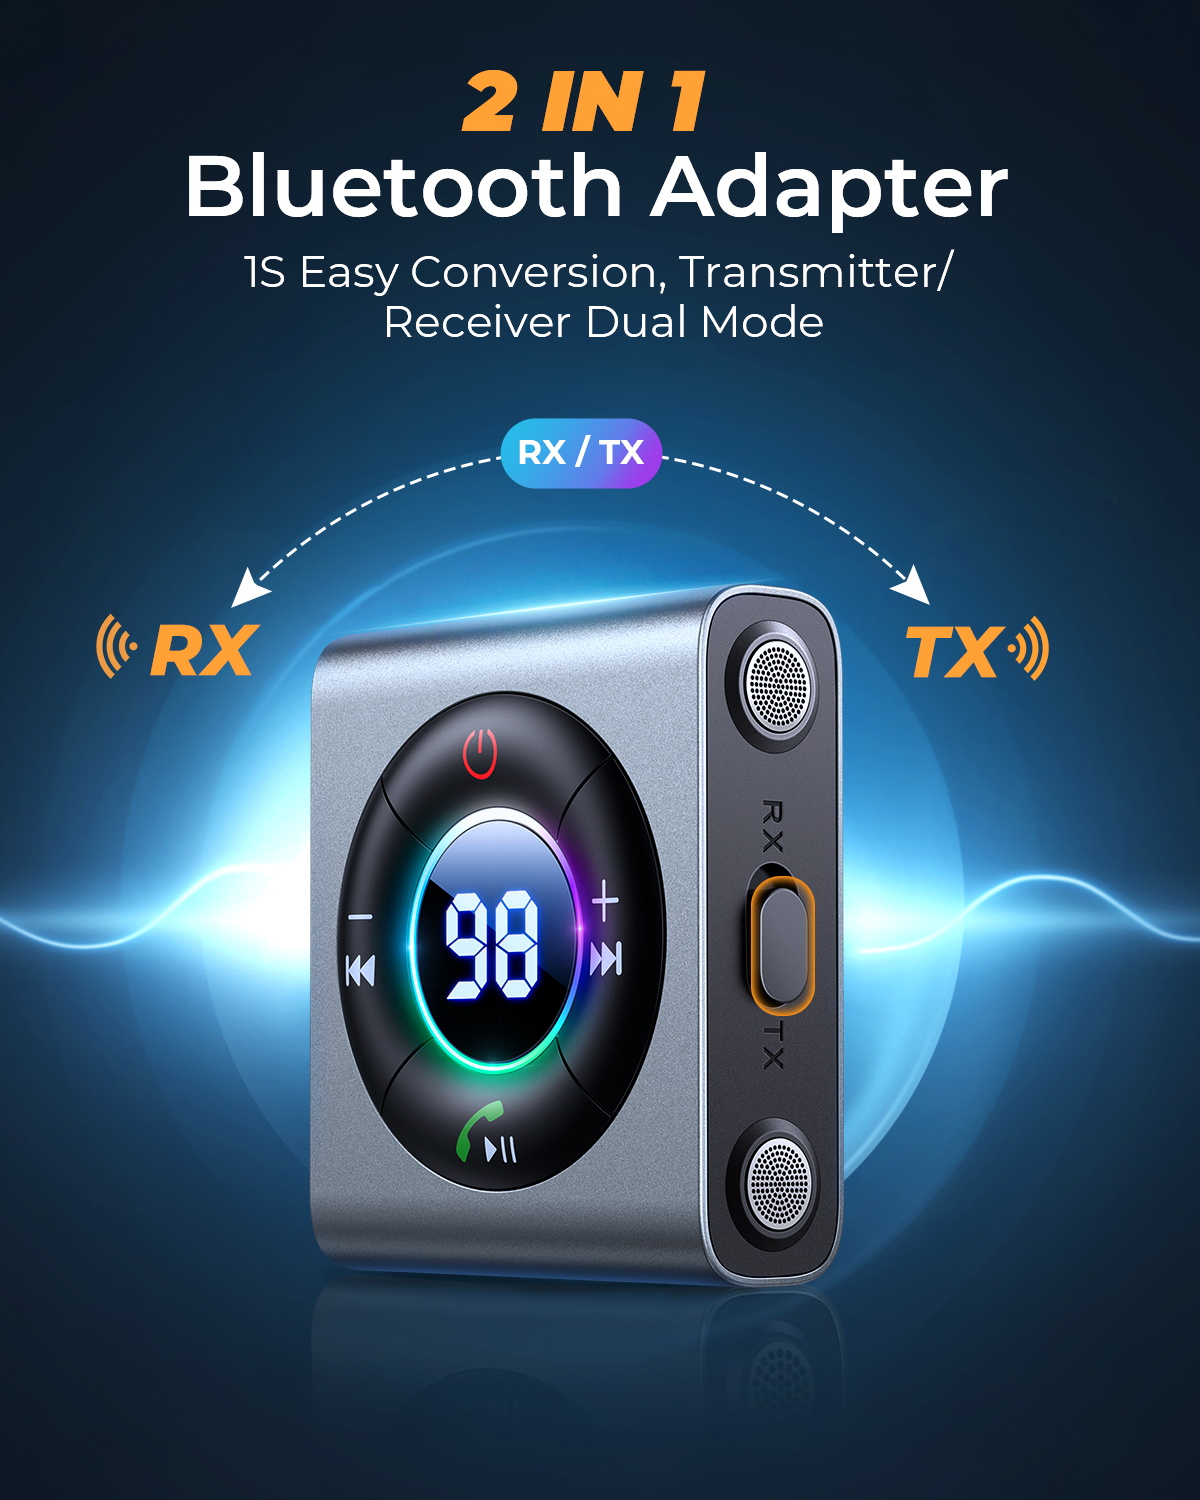 2 in 1 wireless Bluetooth transmitter / receiver